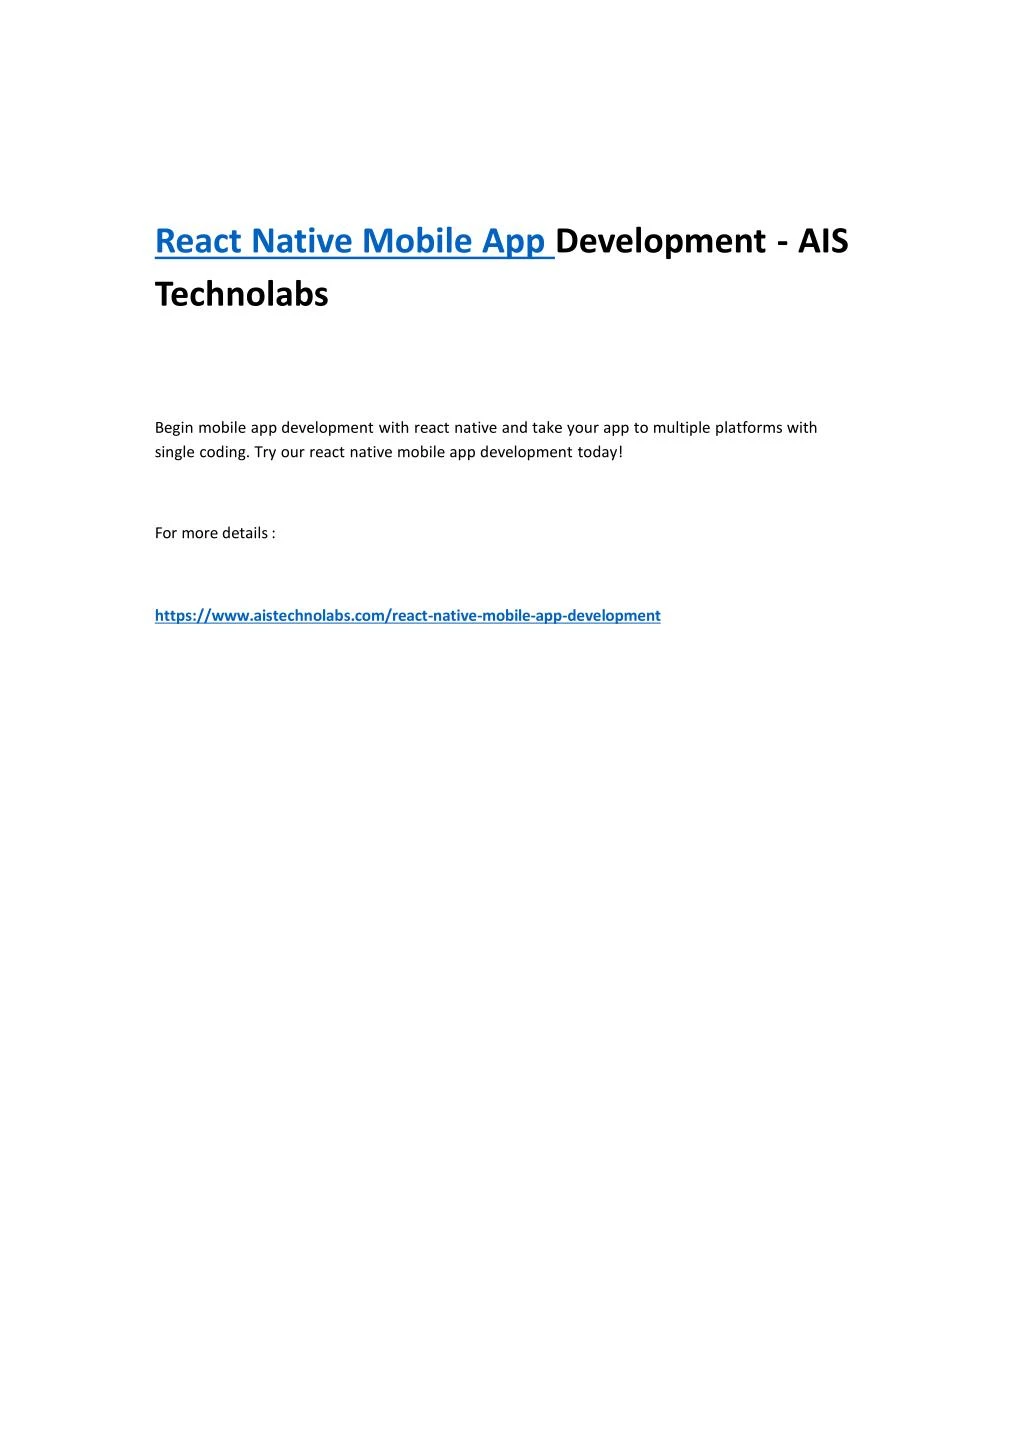 react native mobile app development ais technolabs